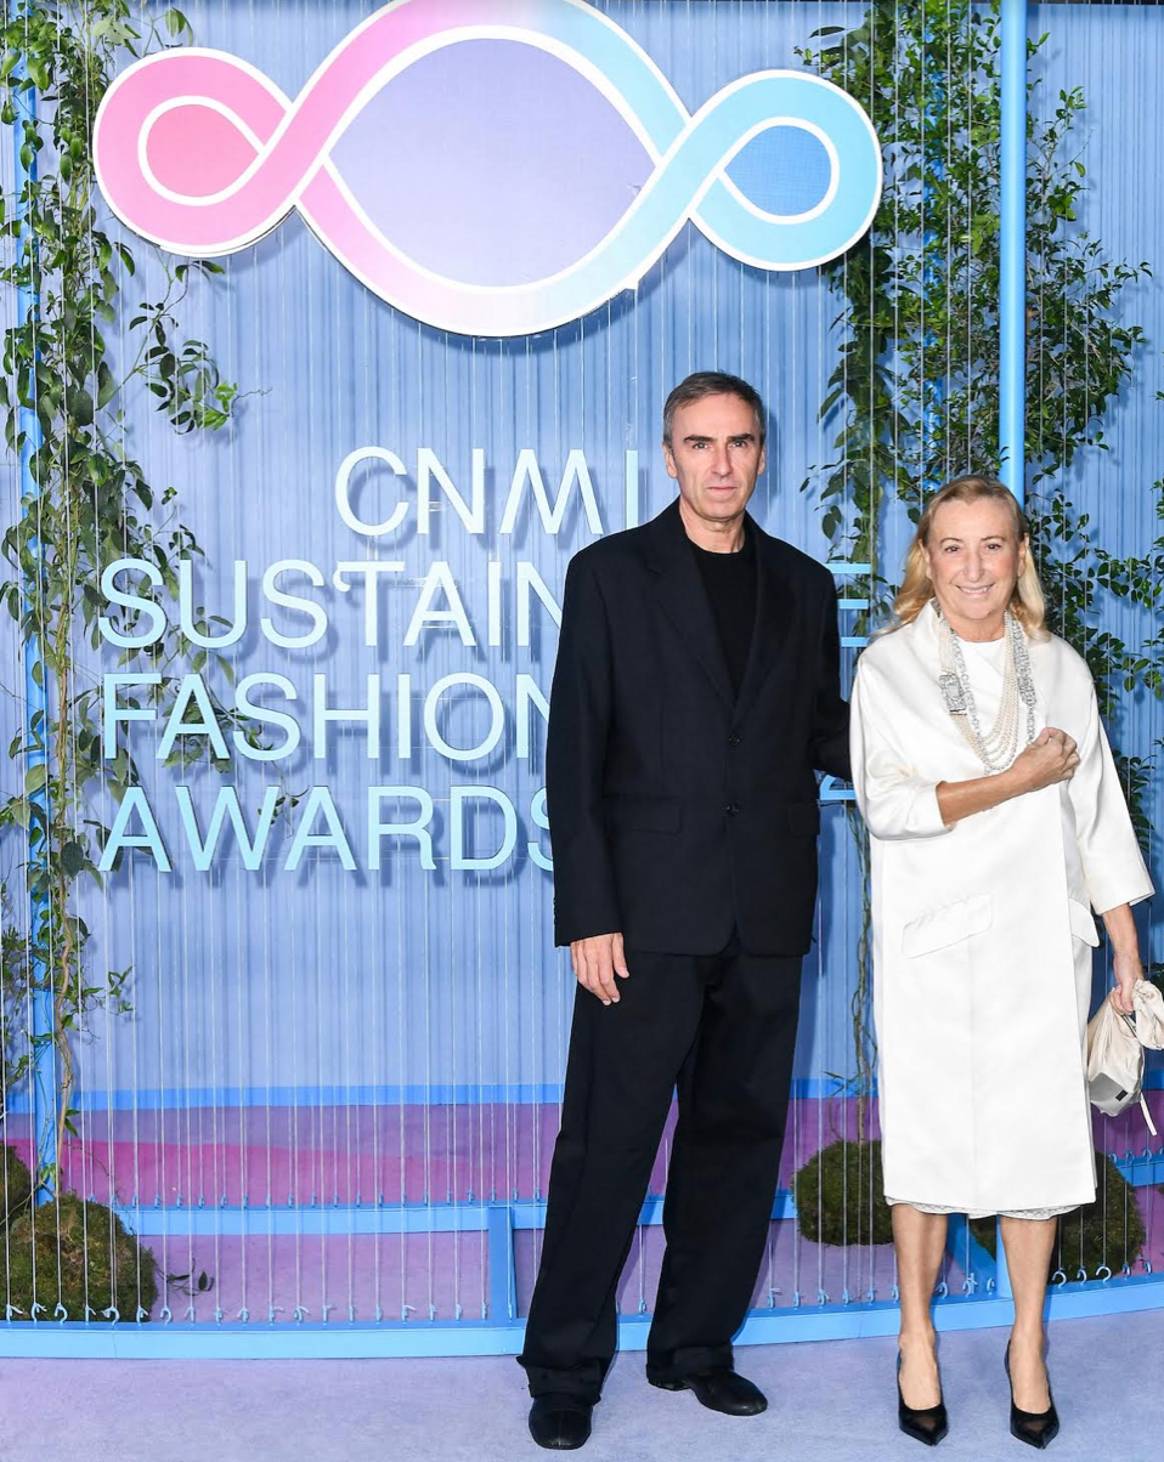 Image: Raf Simon and Miuccia Prada at the CNMI Sustainable Fashion Awards